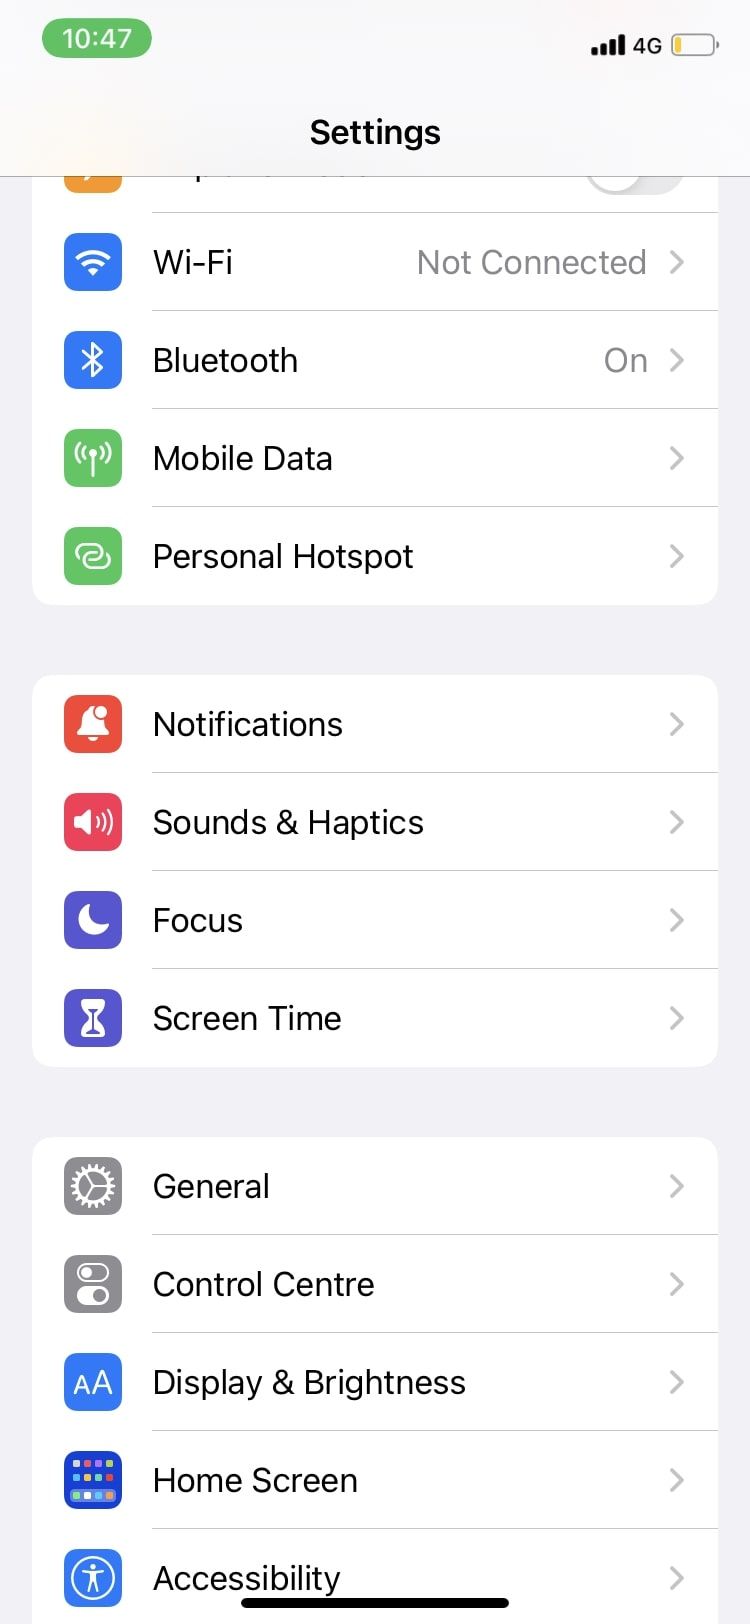 notifications in settings